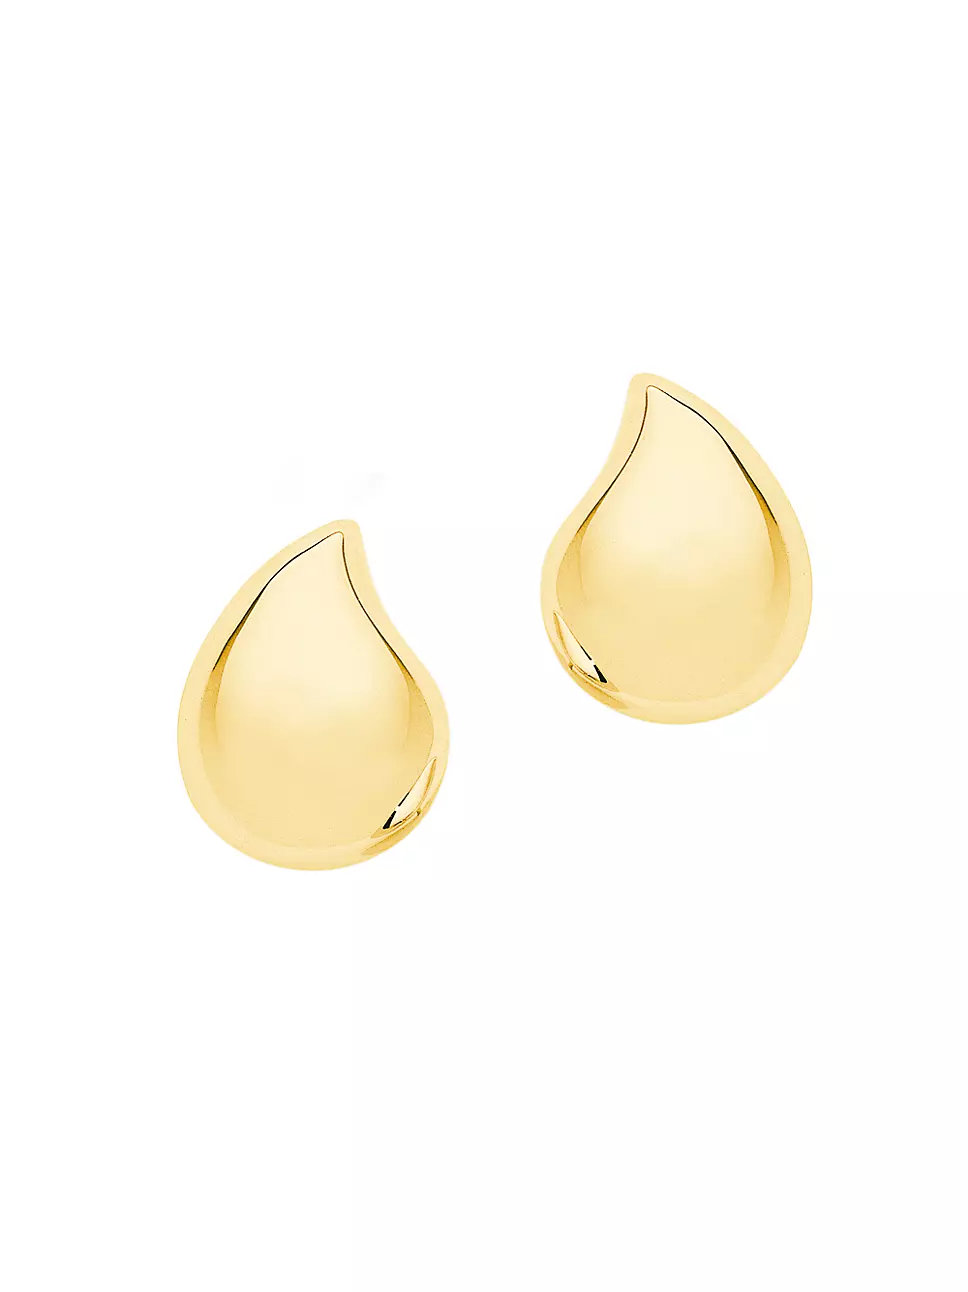 Tamara Comolli Women's Signature Wave 18k Yellow Gold Large Stud Earrings